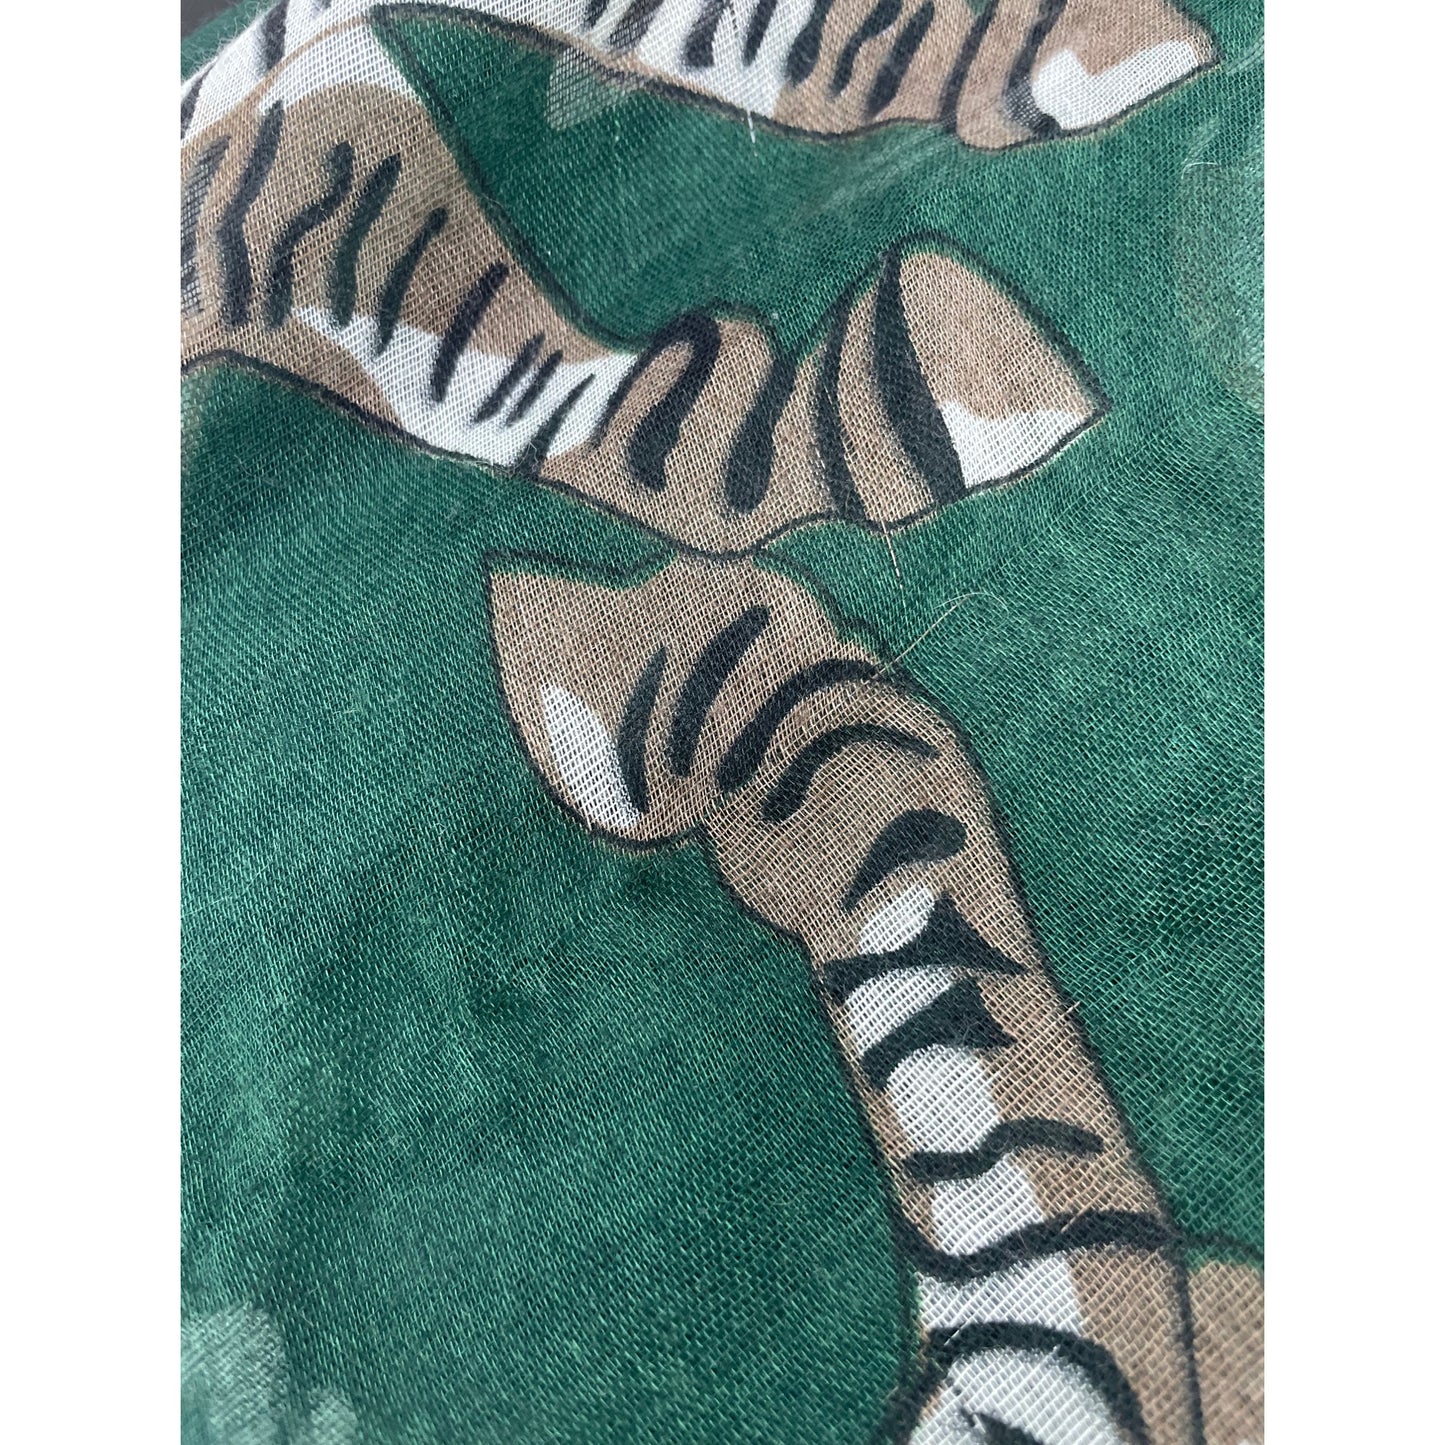 Women's Green, Brown, White & Black Zebra Print Large Sheer Scarf